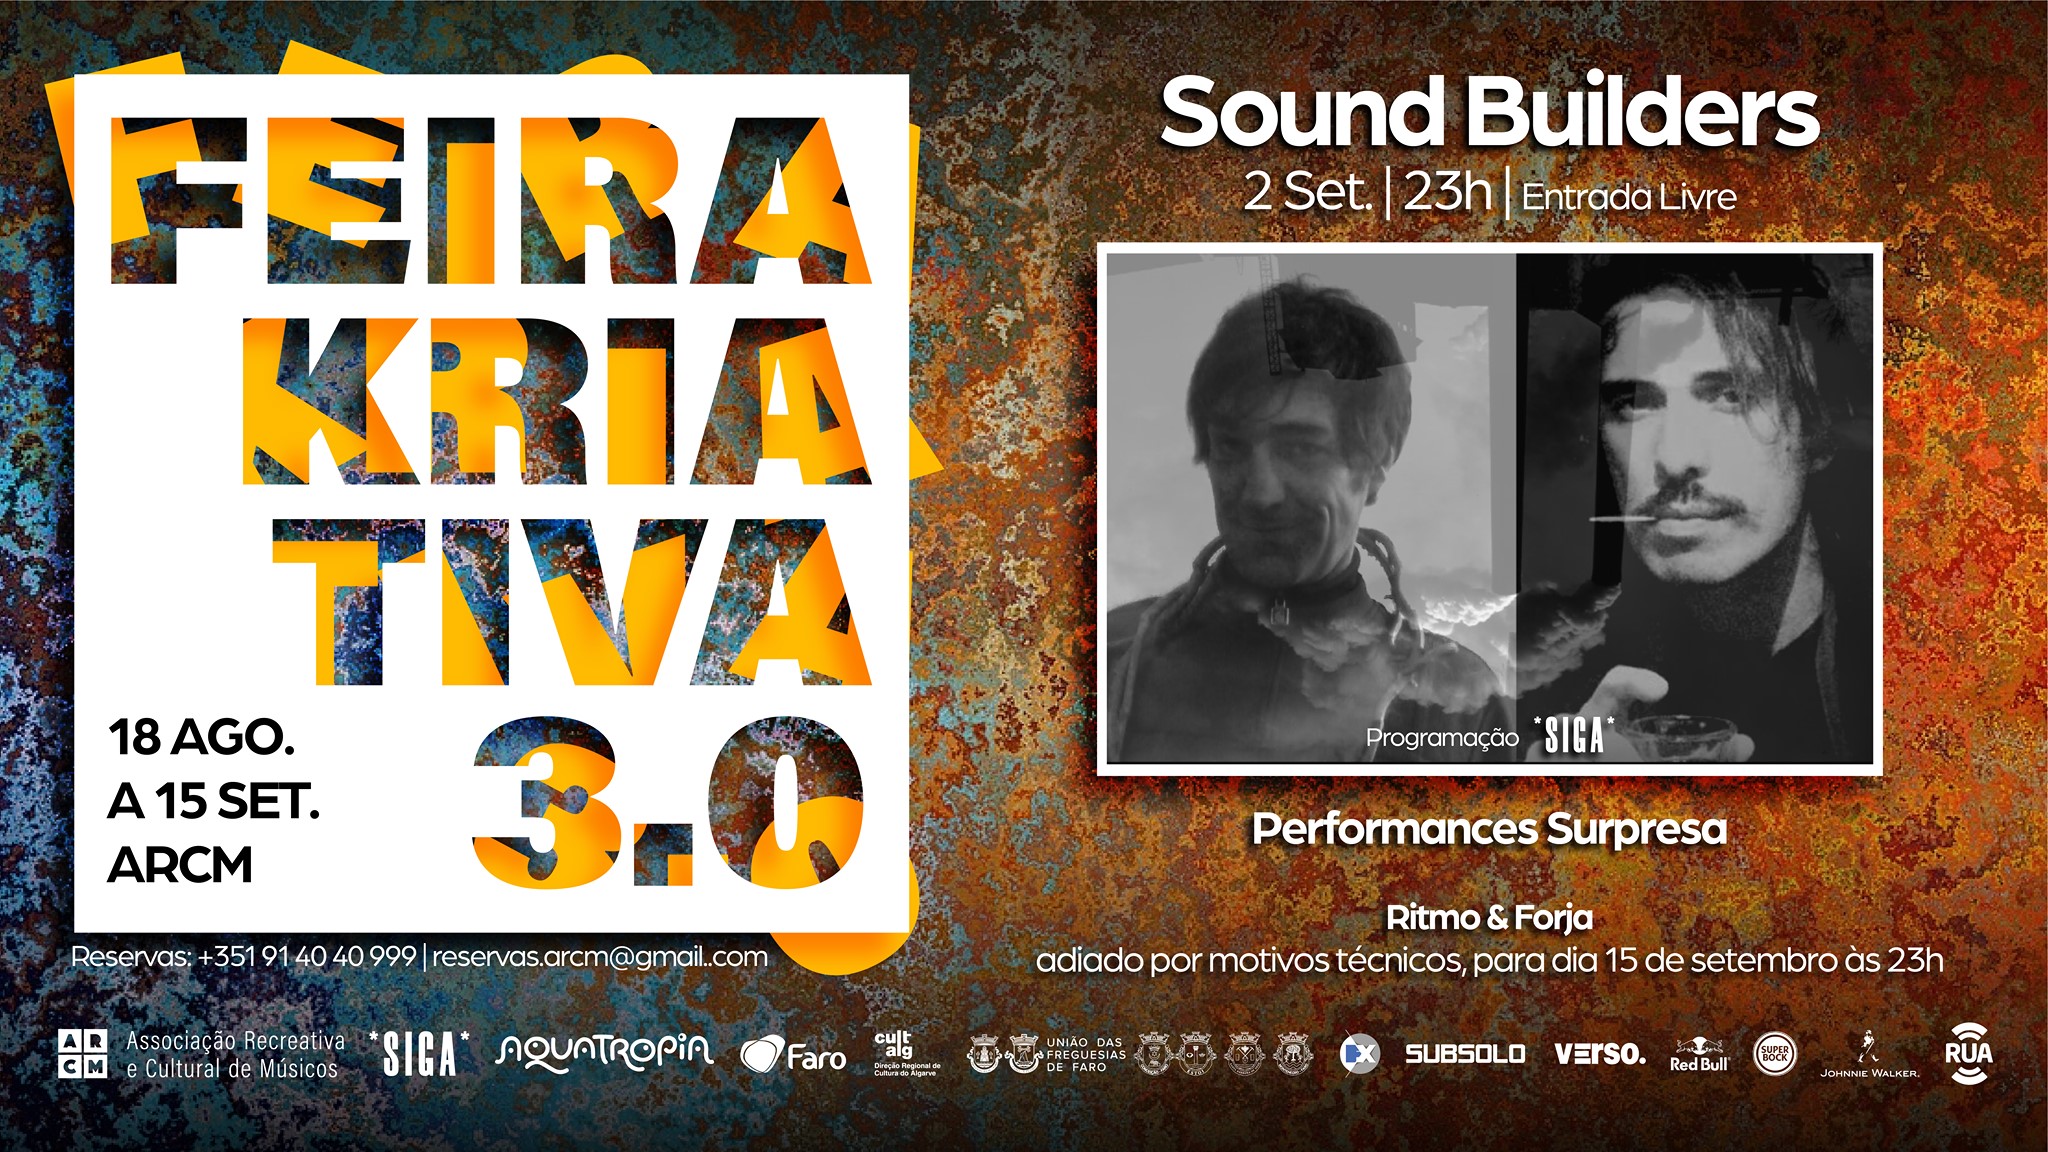 Feira Kriativa 3.0 | Sound Builders | Performances surpresa